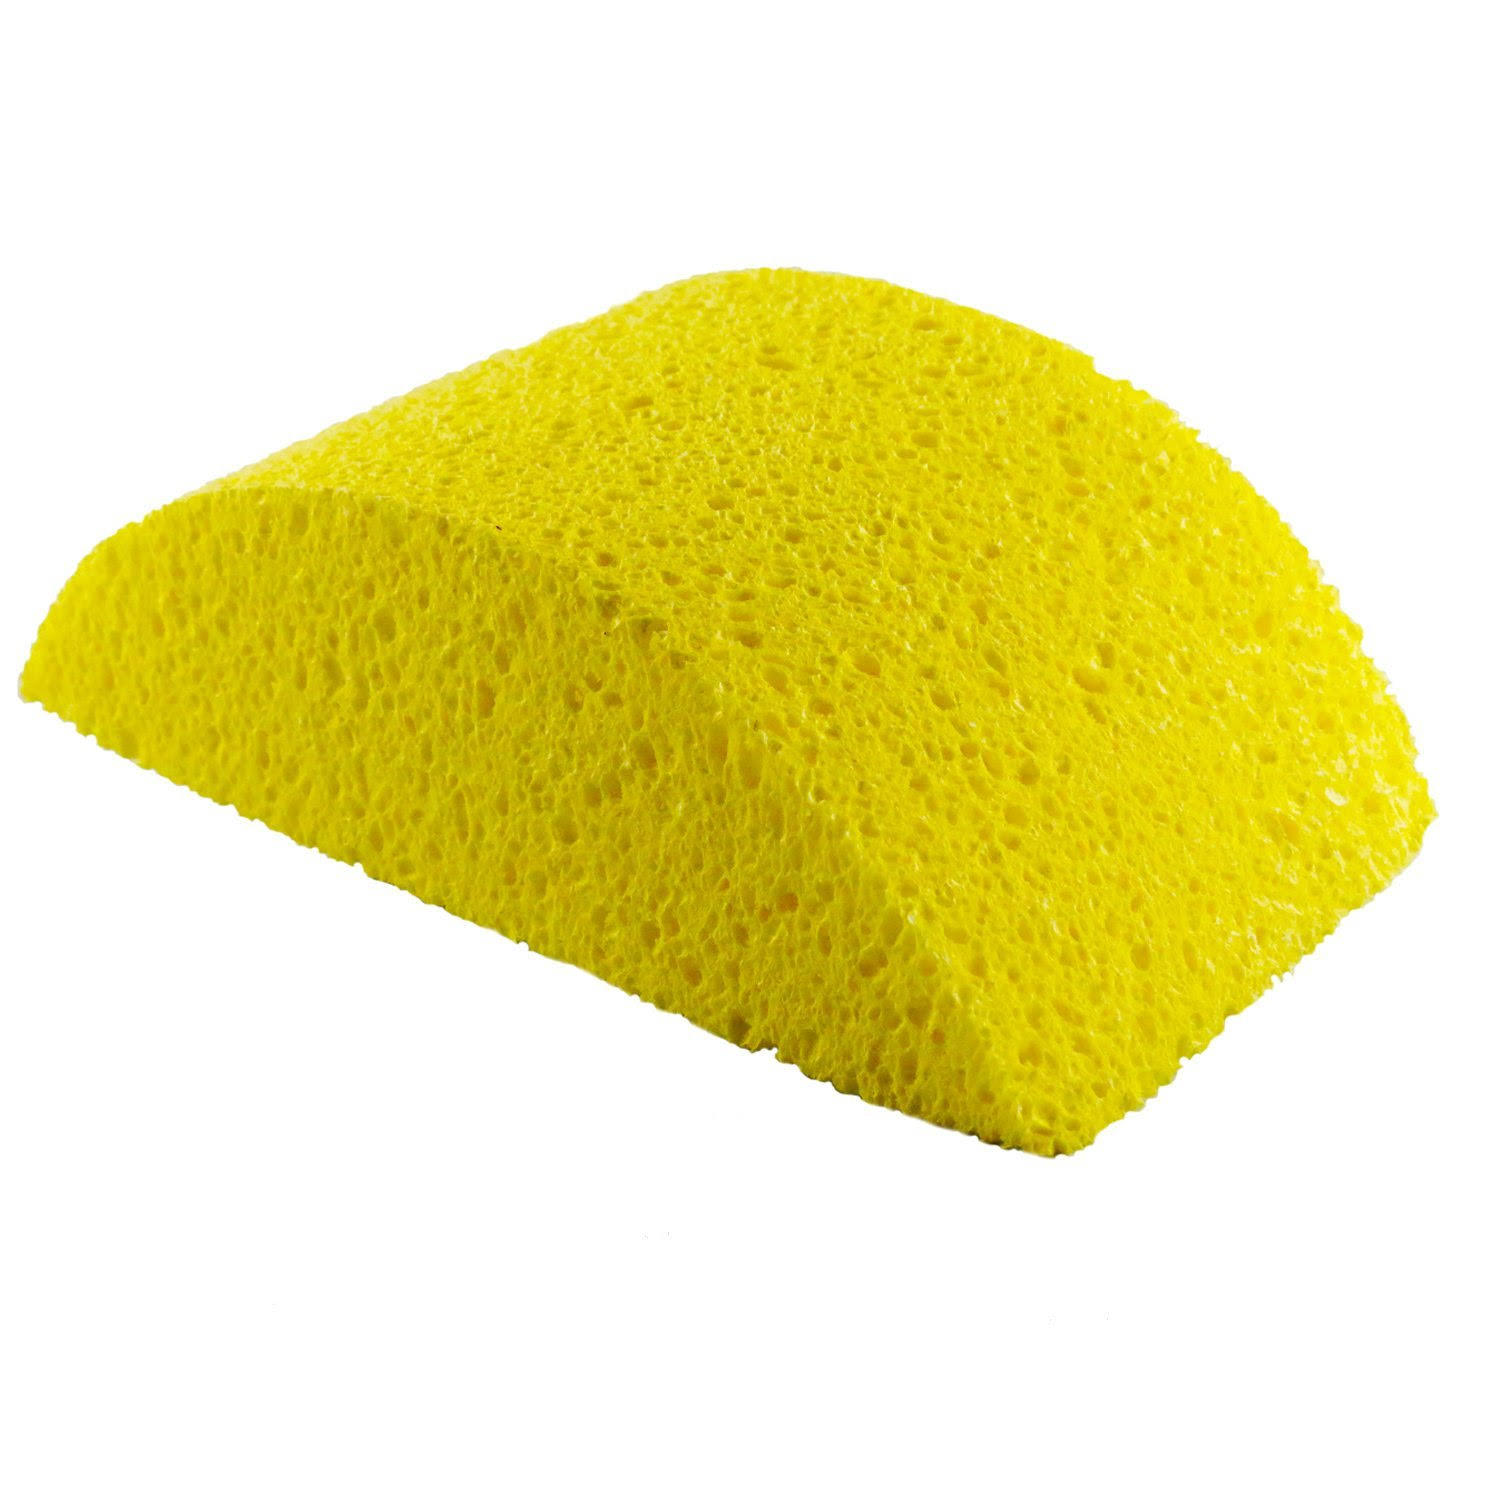 Dynamic PZ531211 Turtleback Sponge for Wallpaper Cleaning or Sponge Painting